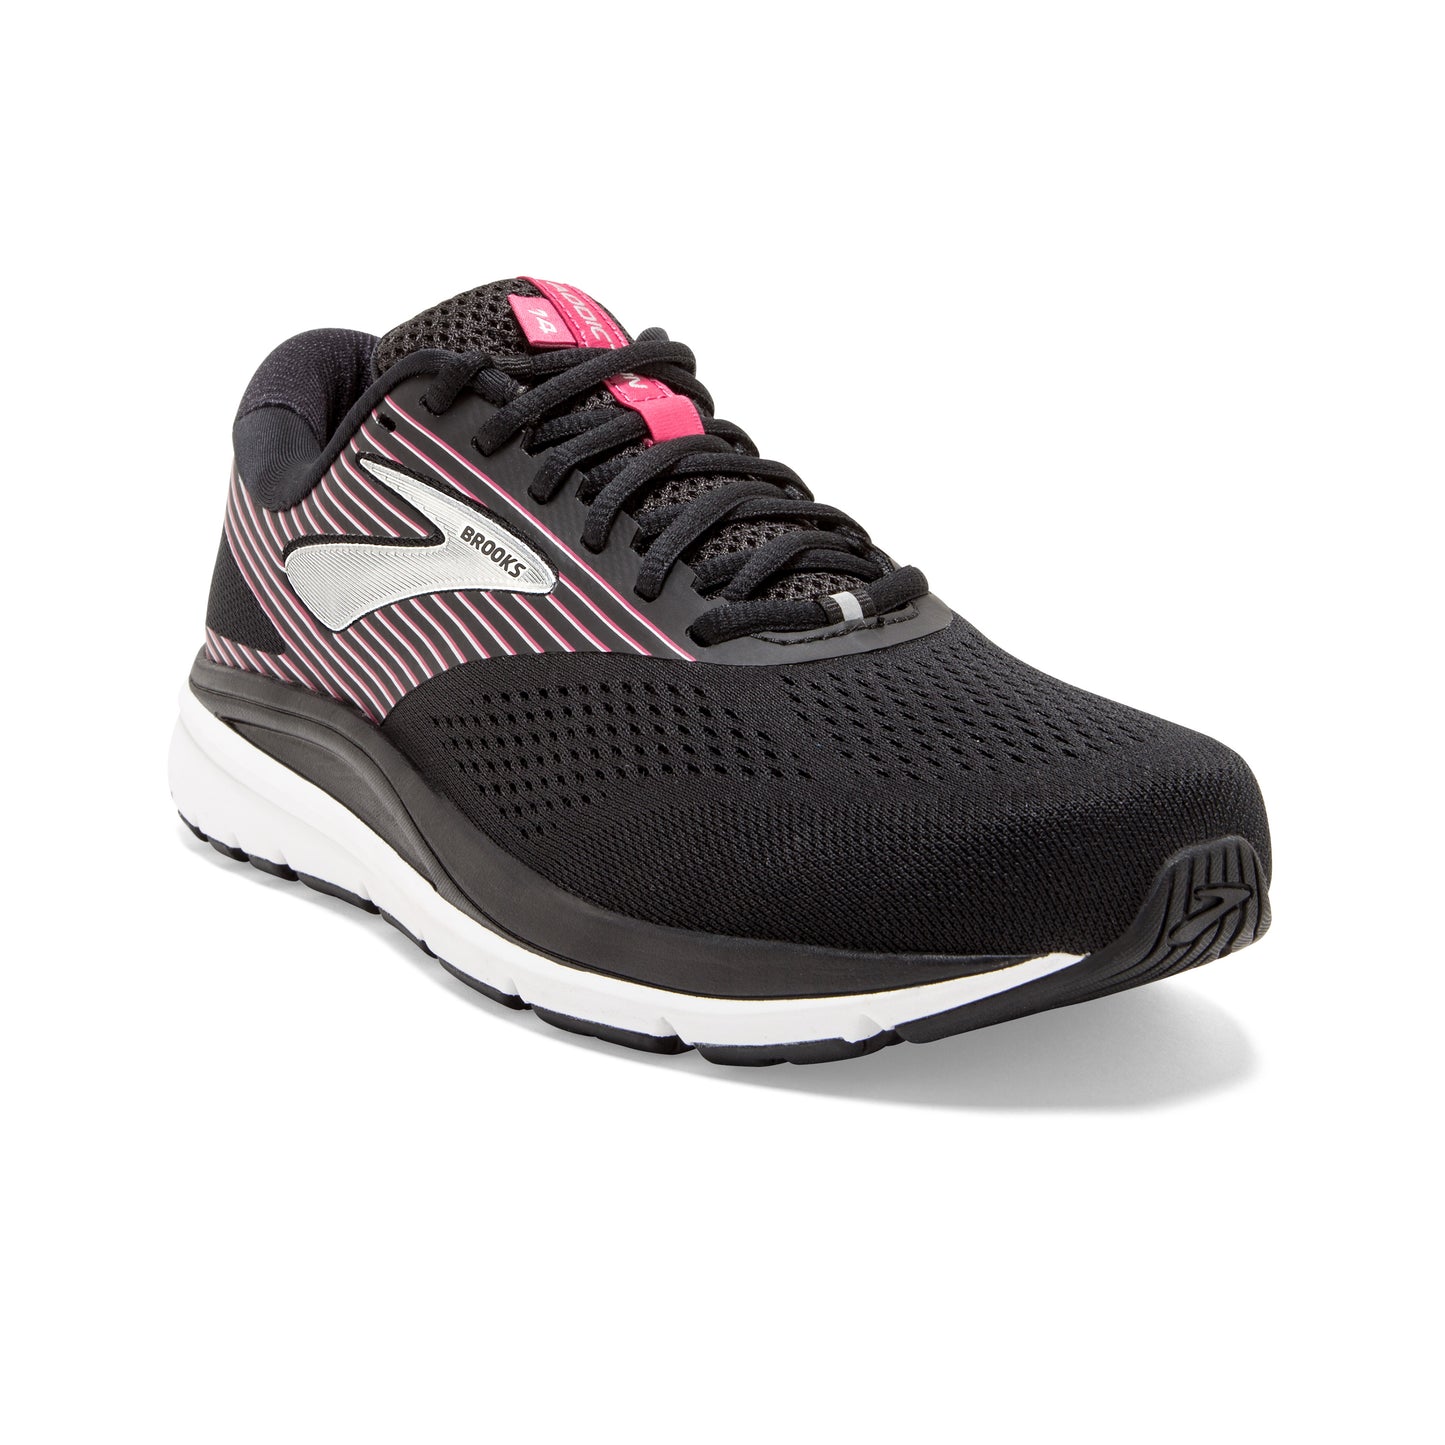 Women's Addiction 14 Running Shoe - Black/Hot Pink/Silver - Narrow (2A)